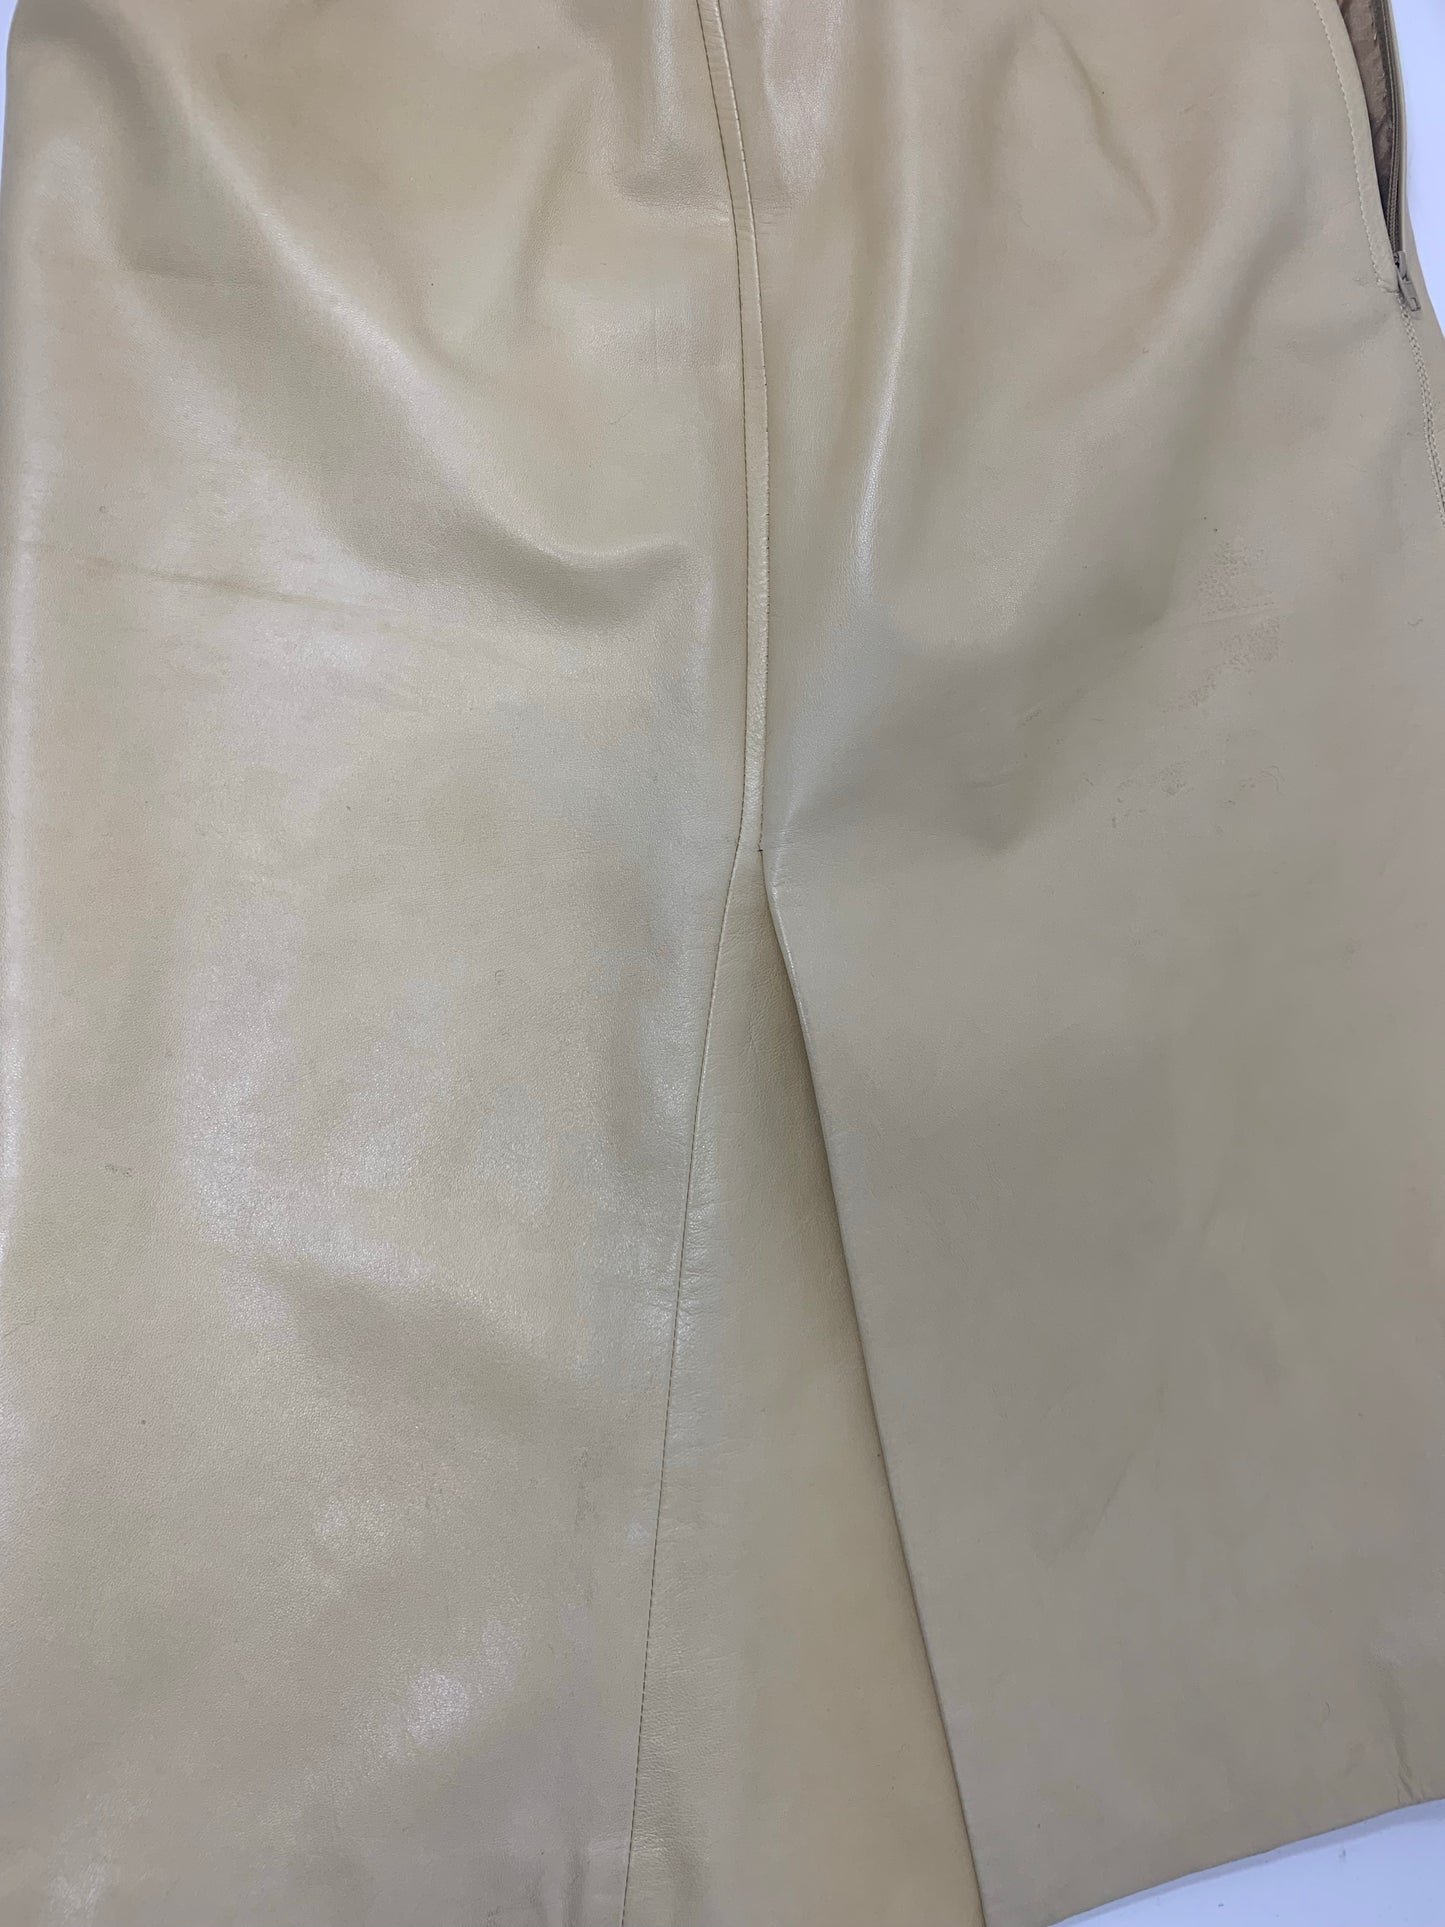 YSL Vintage Leather Skirt